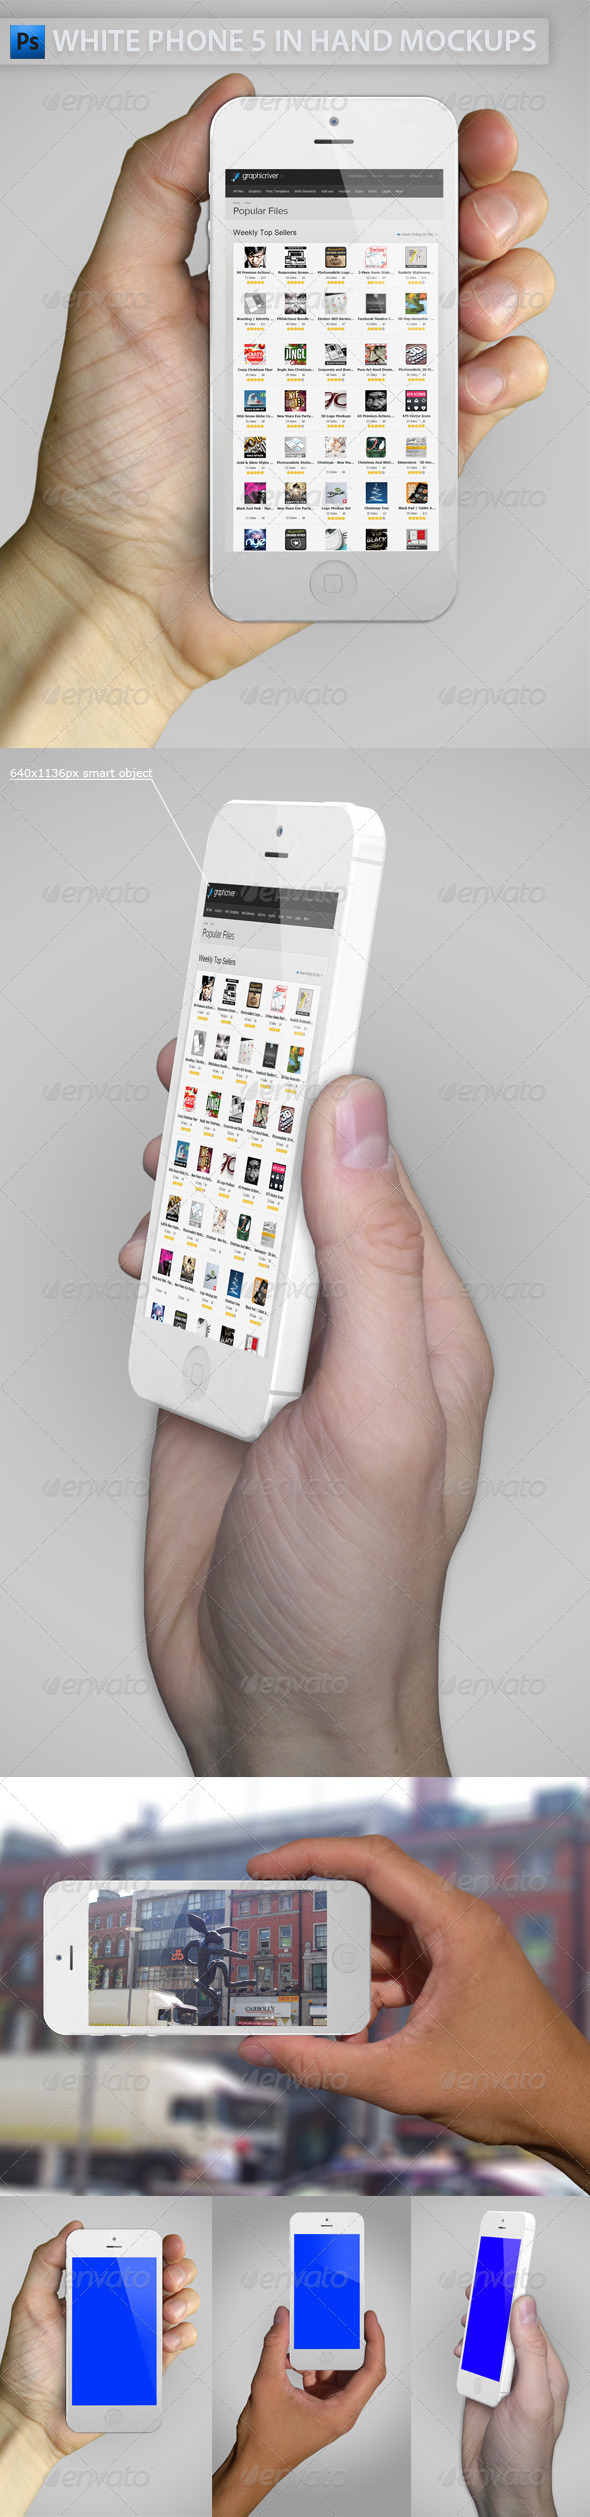 White Phone 5 in Hand Mockups